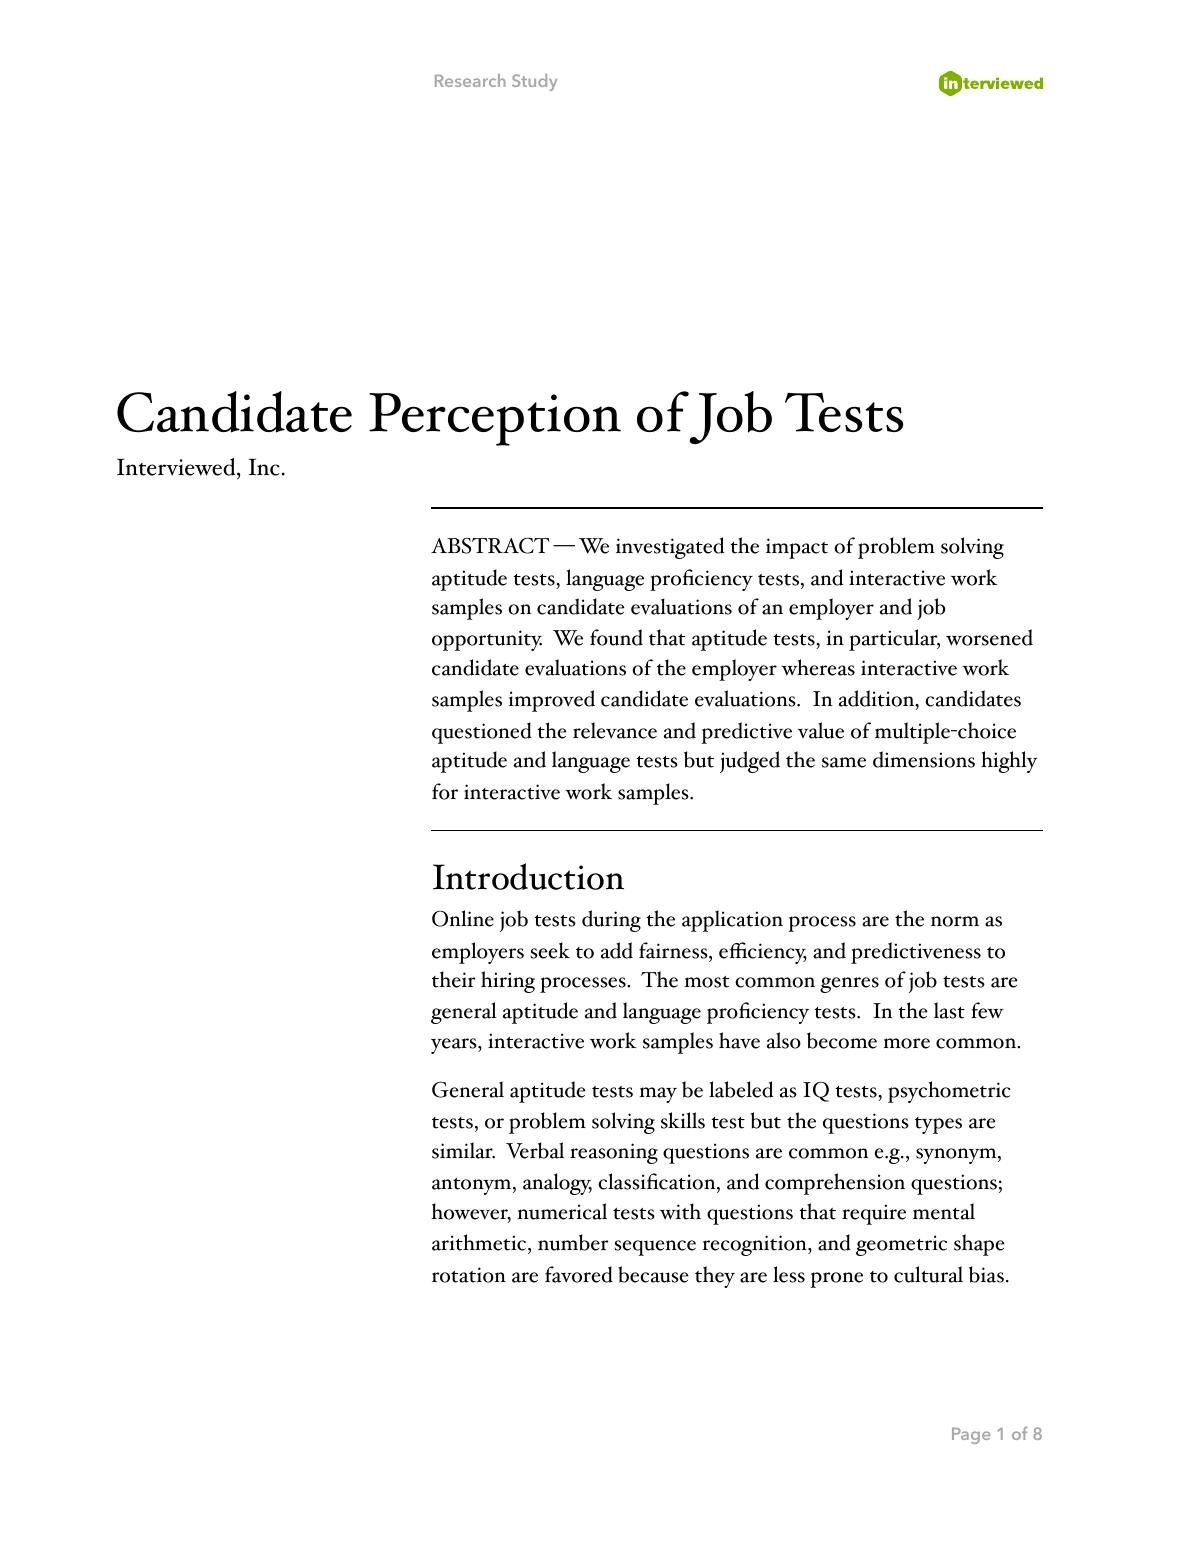 Candidate Perception of Job Tests